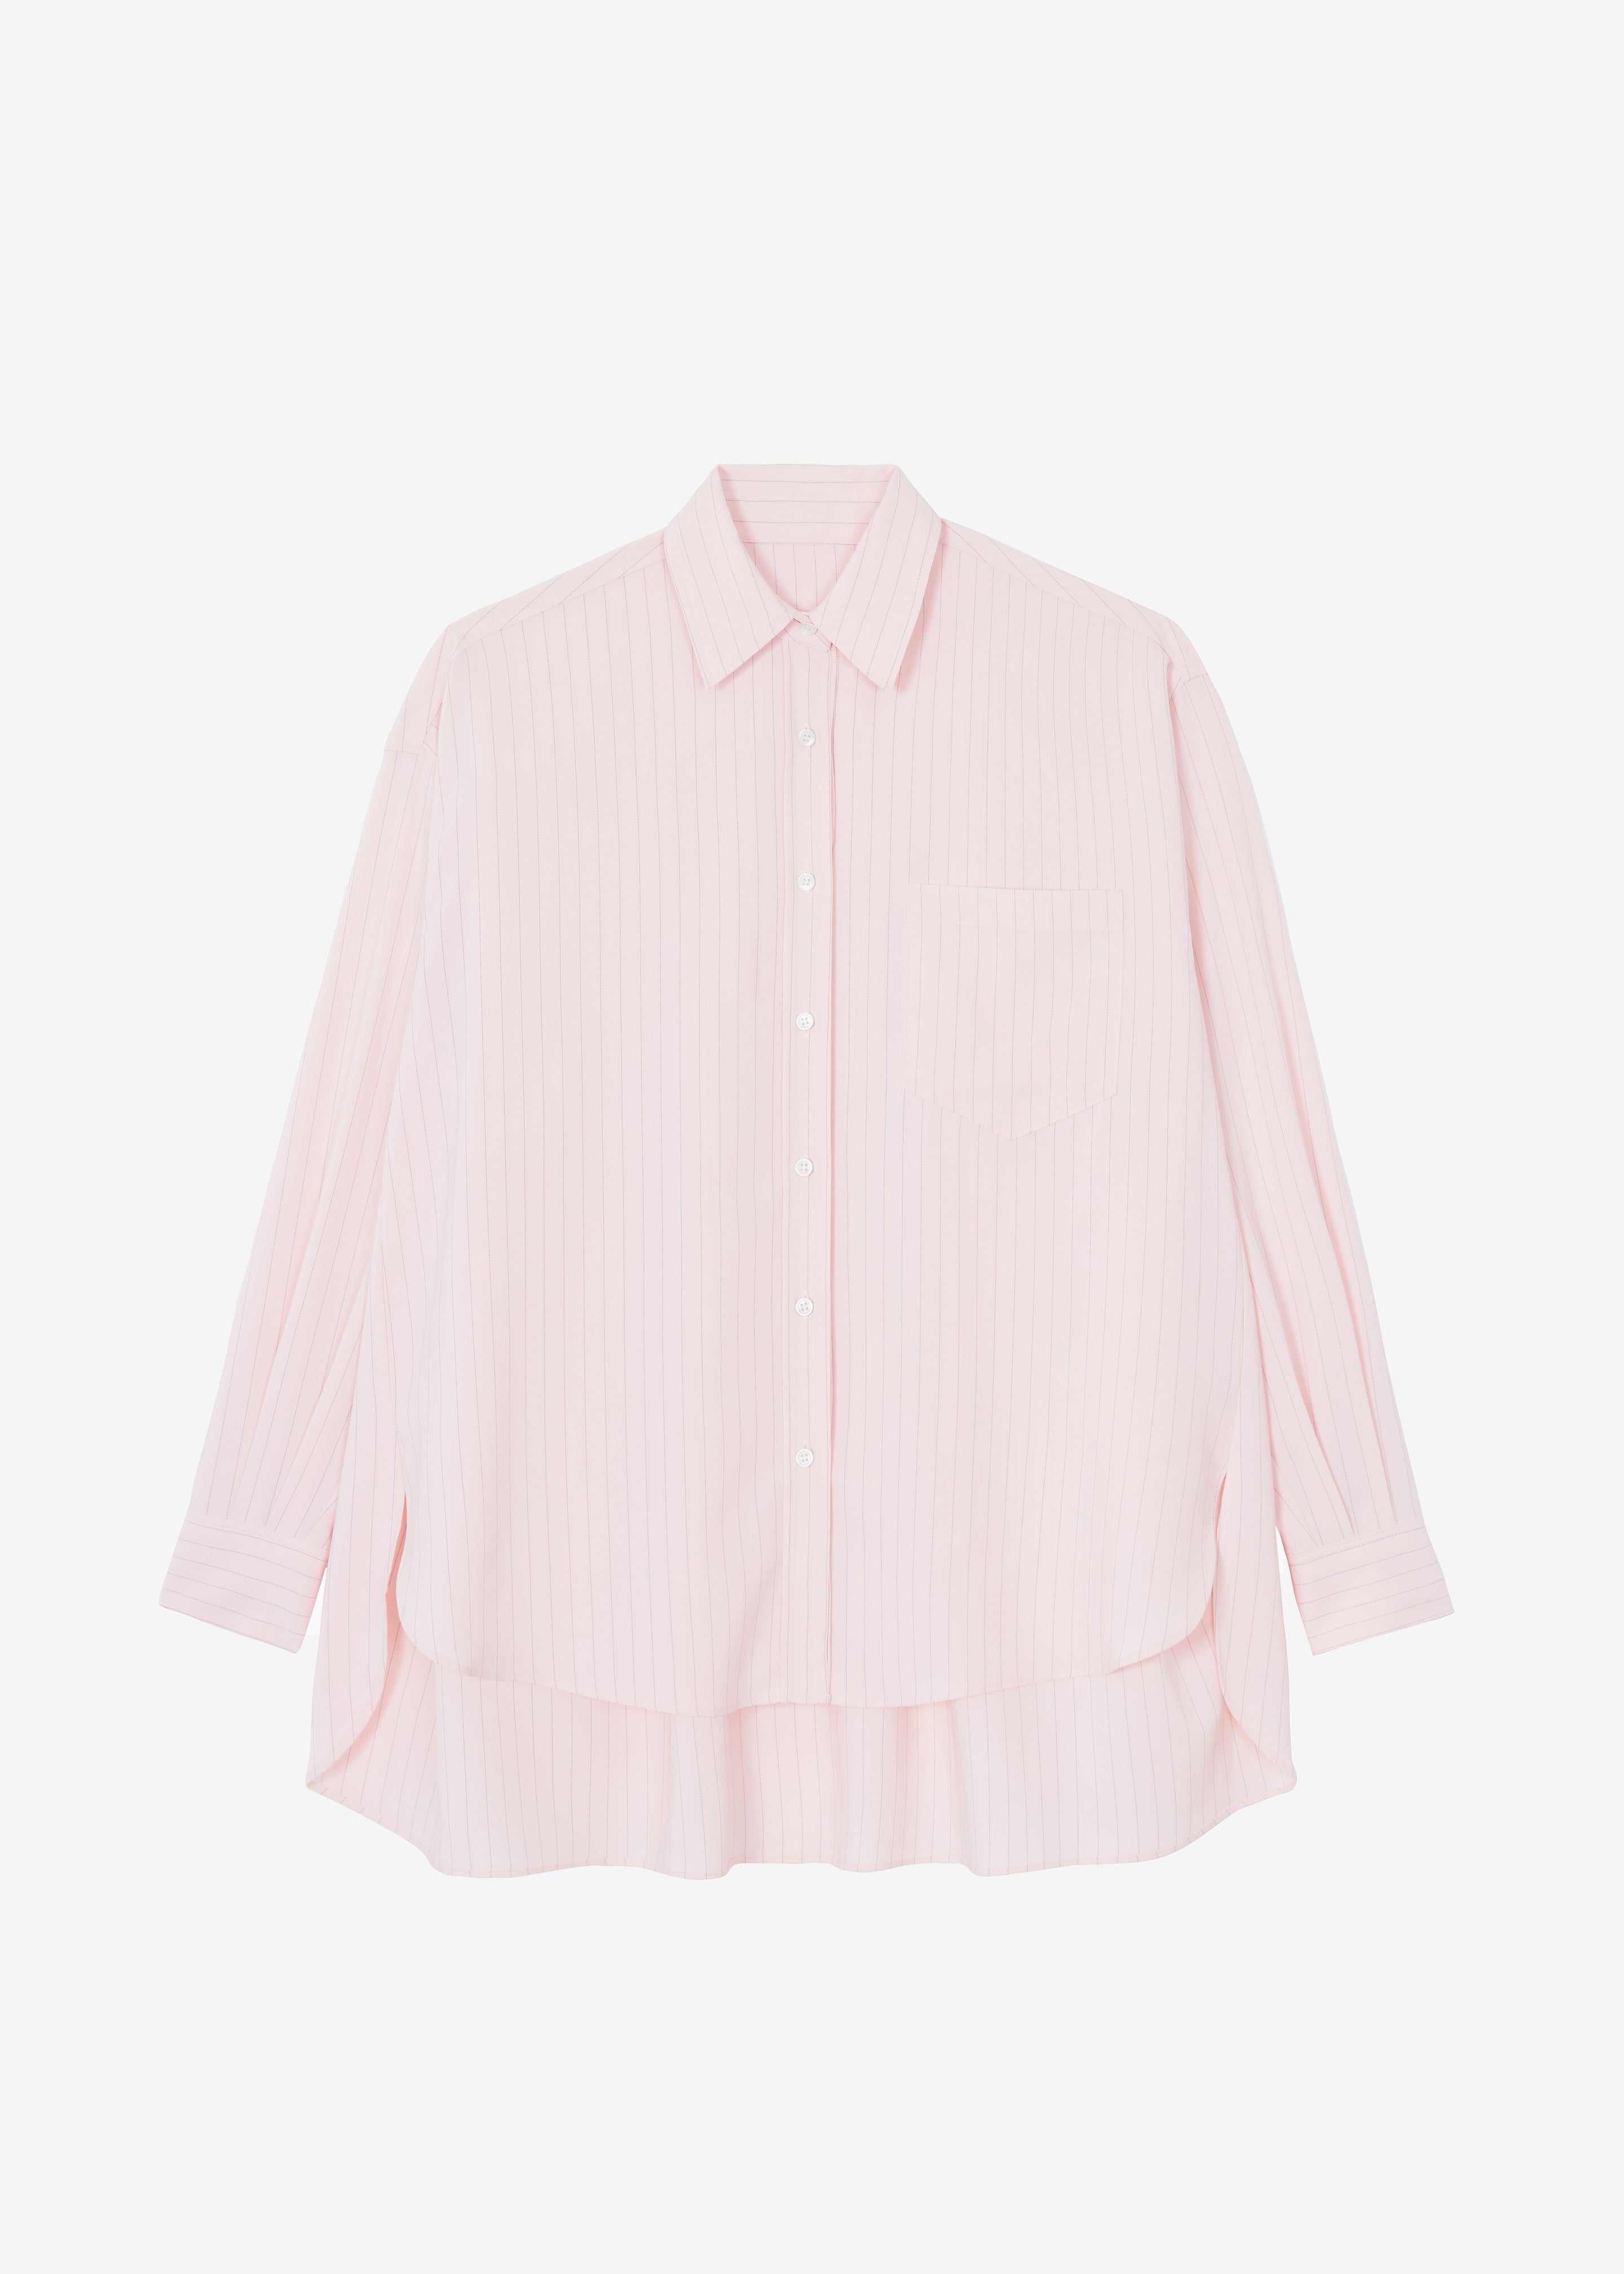 Georgia Fluid Shirt - Pink Pinstripe - 8